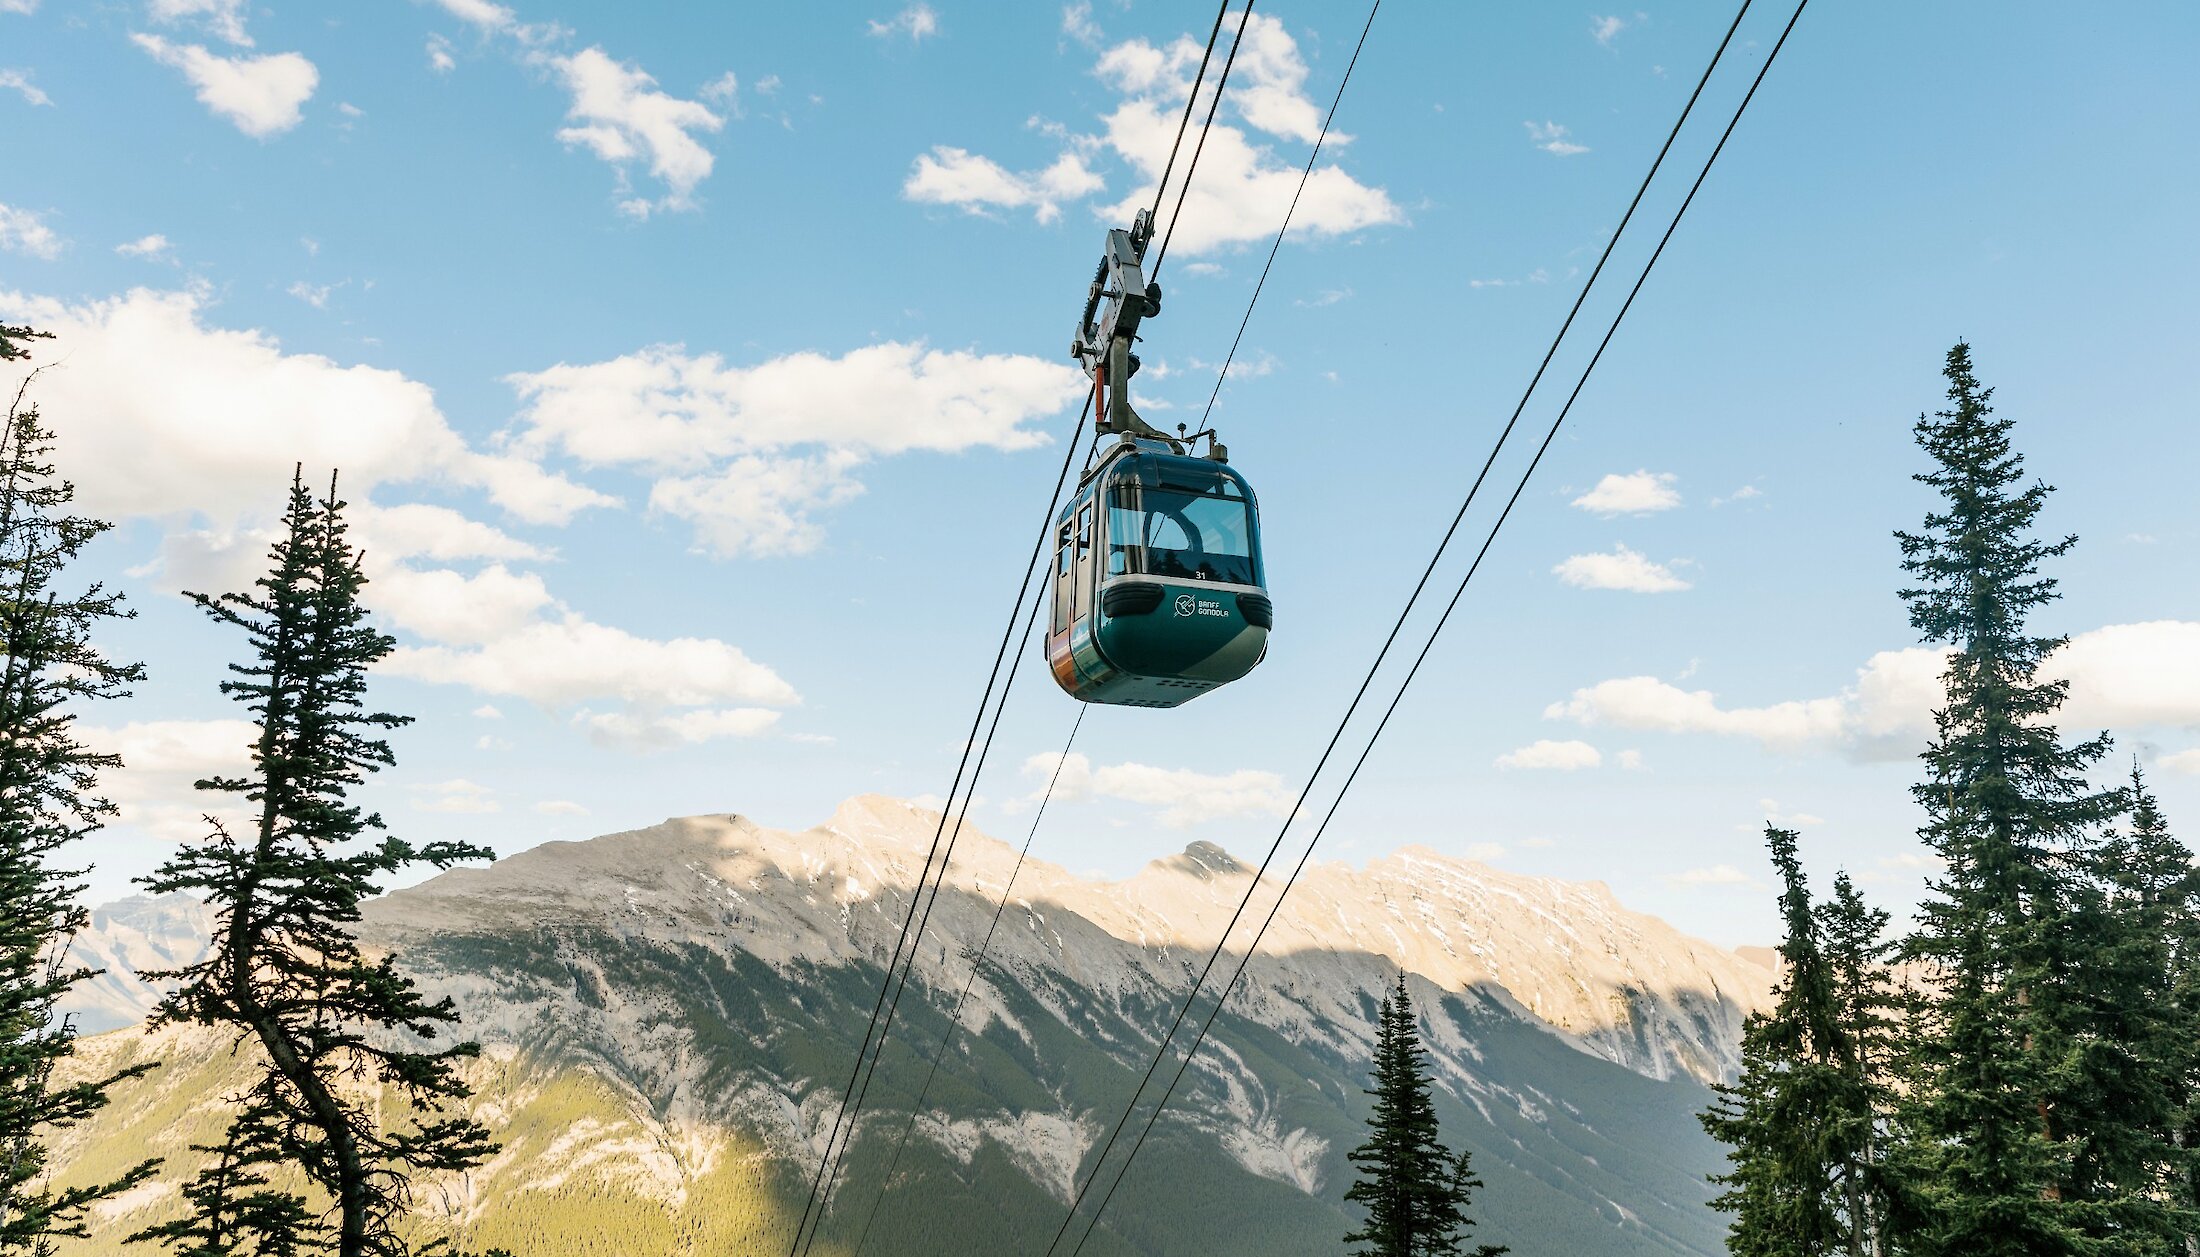 The Banff Gondola in summer